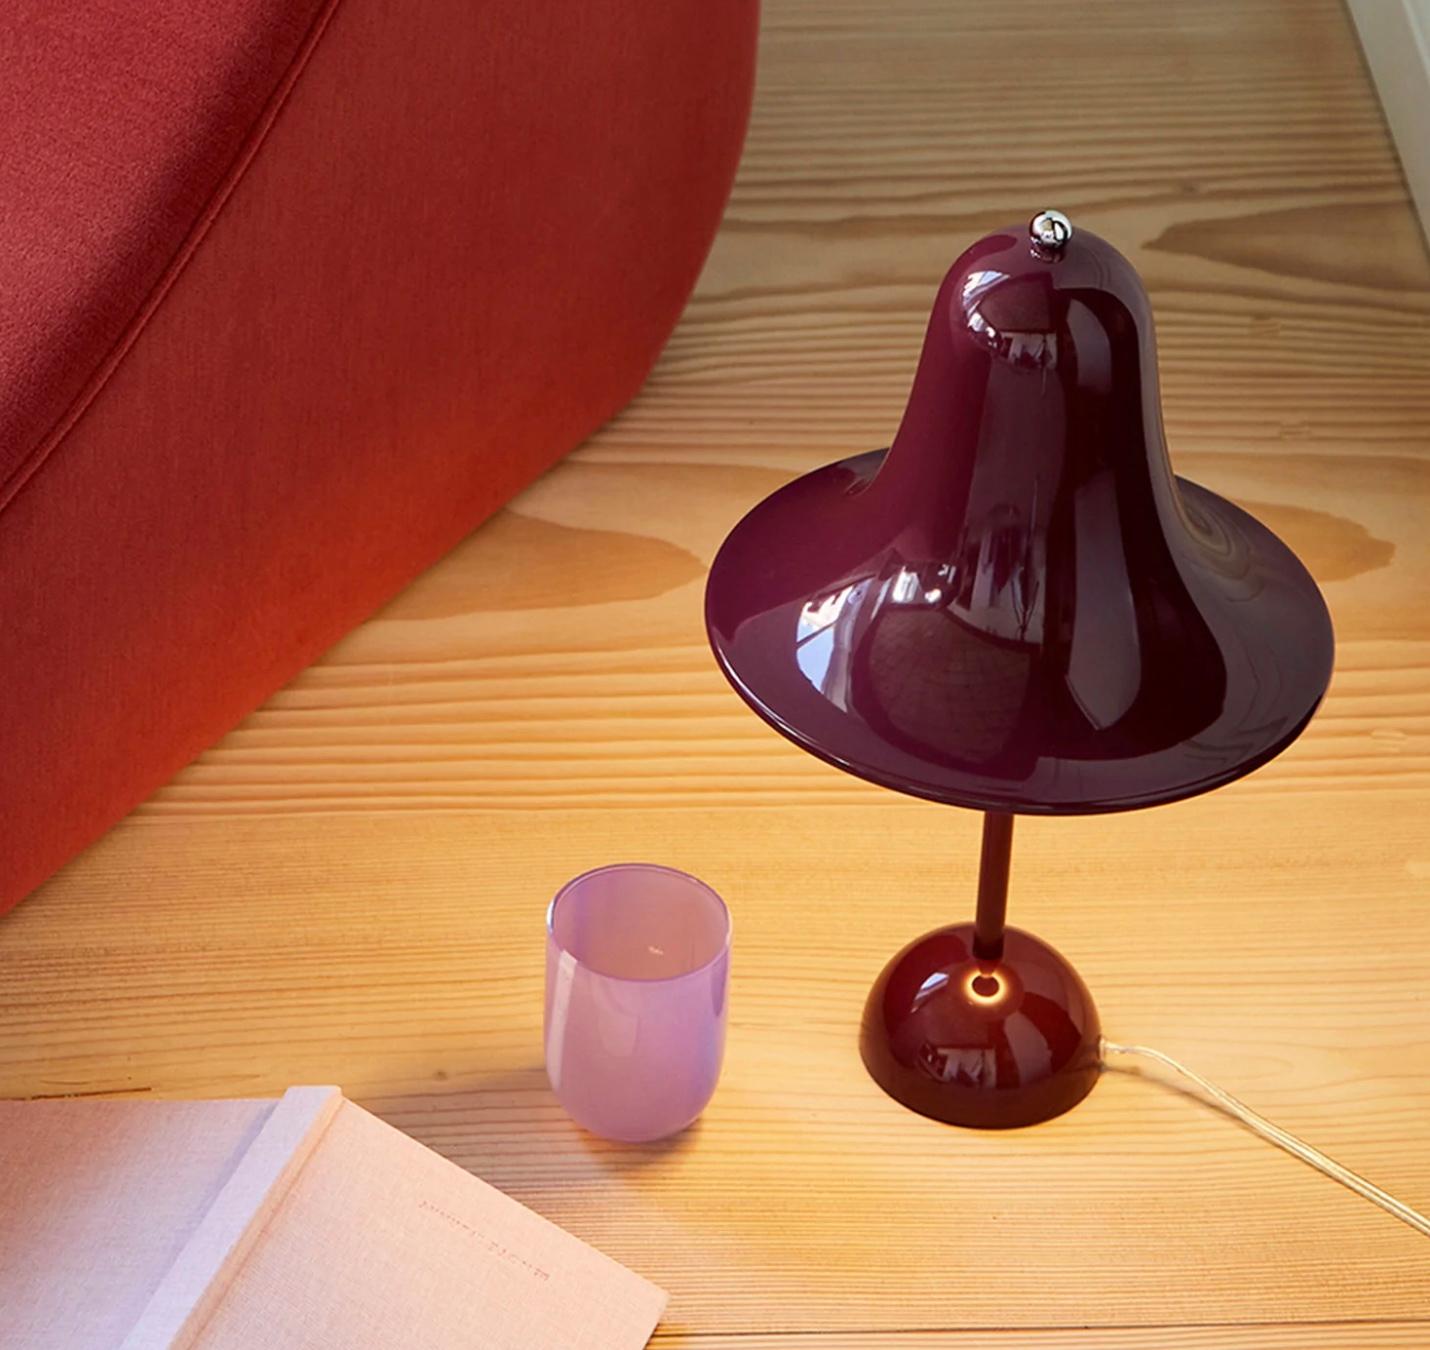 Verner Panton 'Pantop' Table Lamp in 'Dusty Rose' 1980 for Verpan For Sale 4